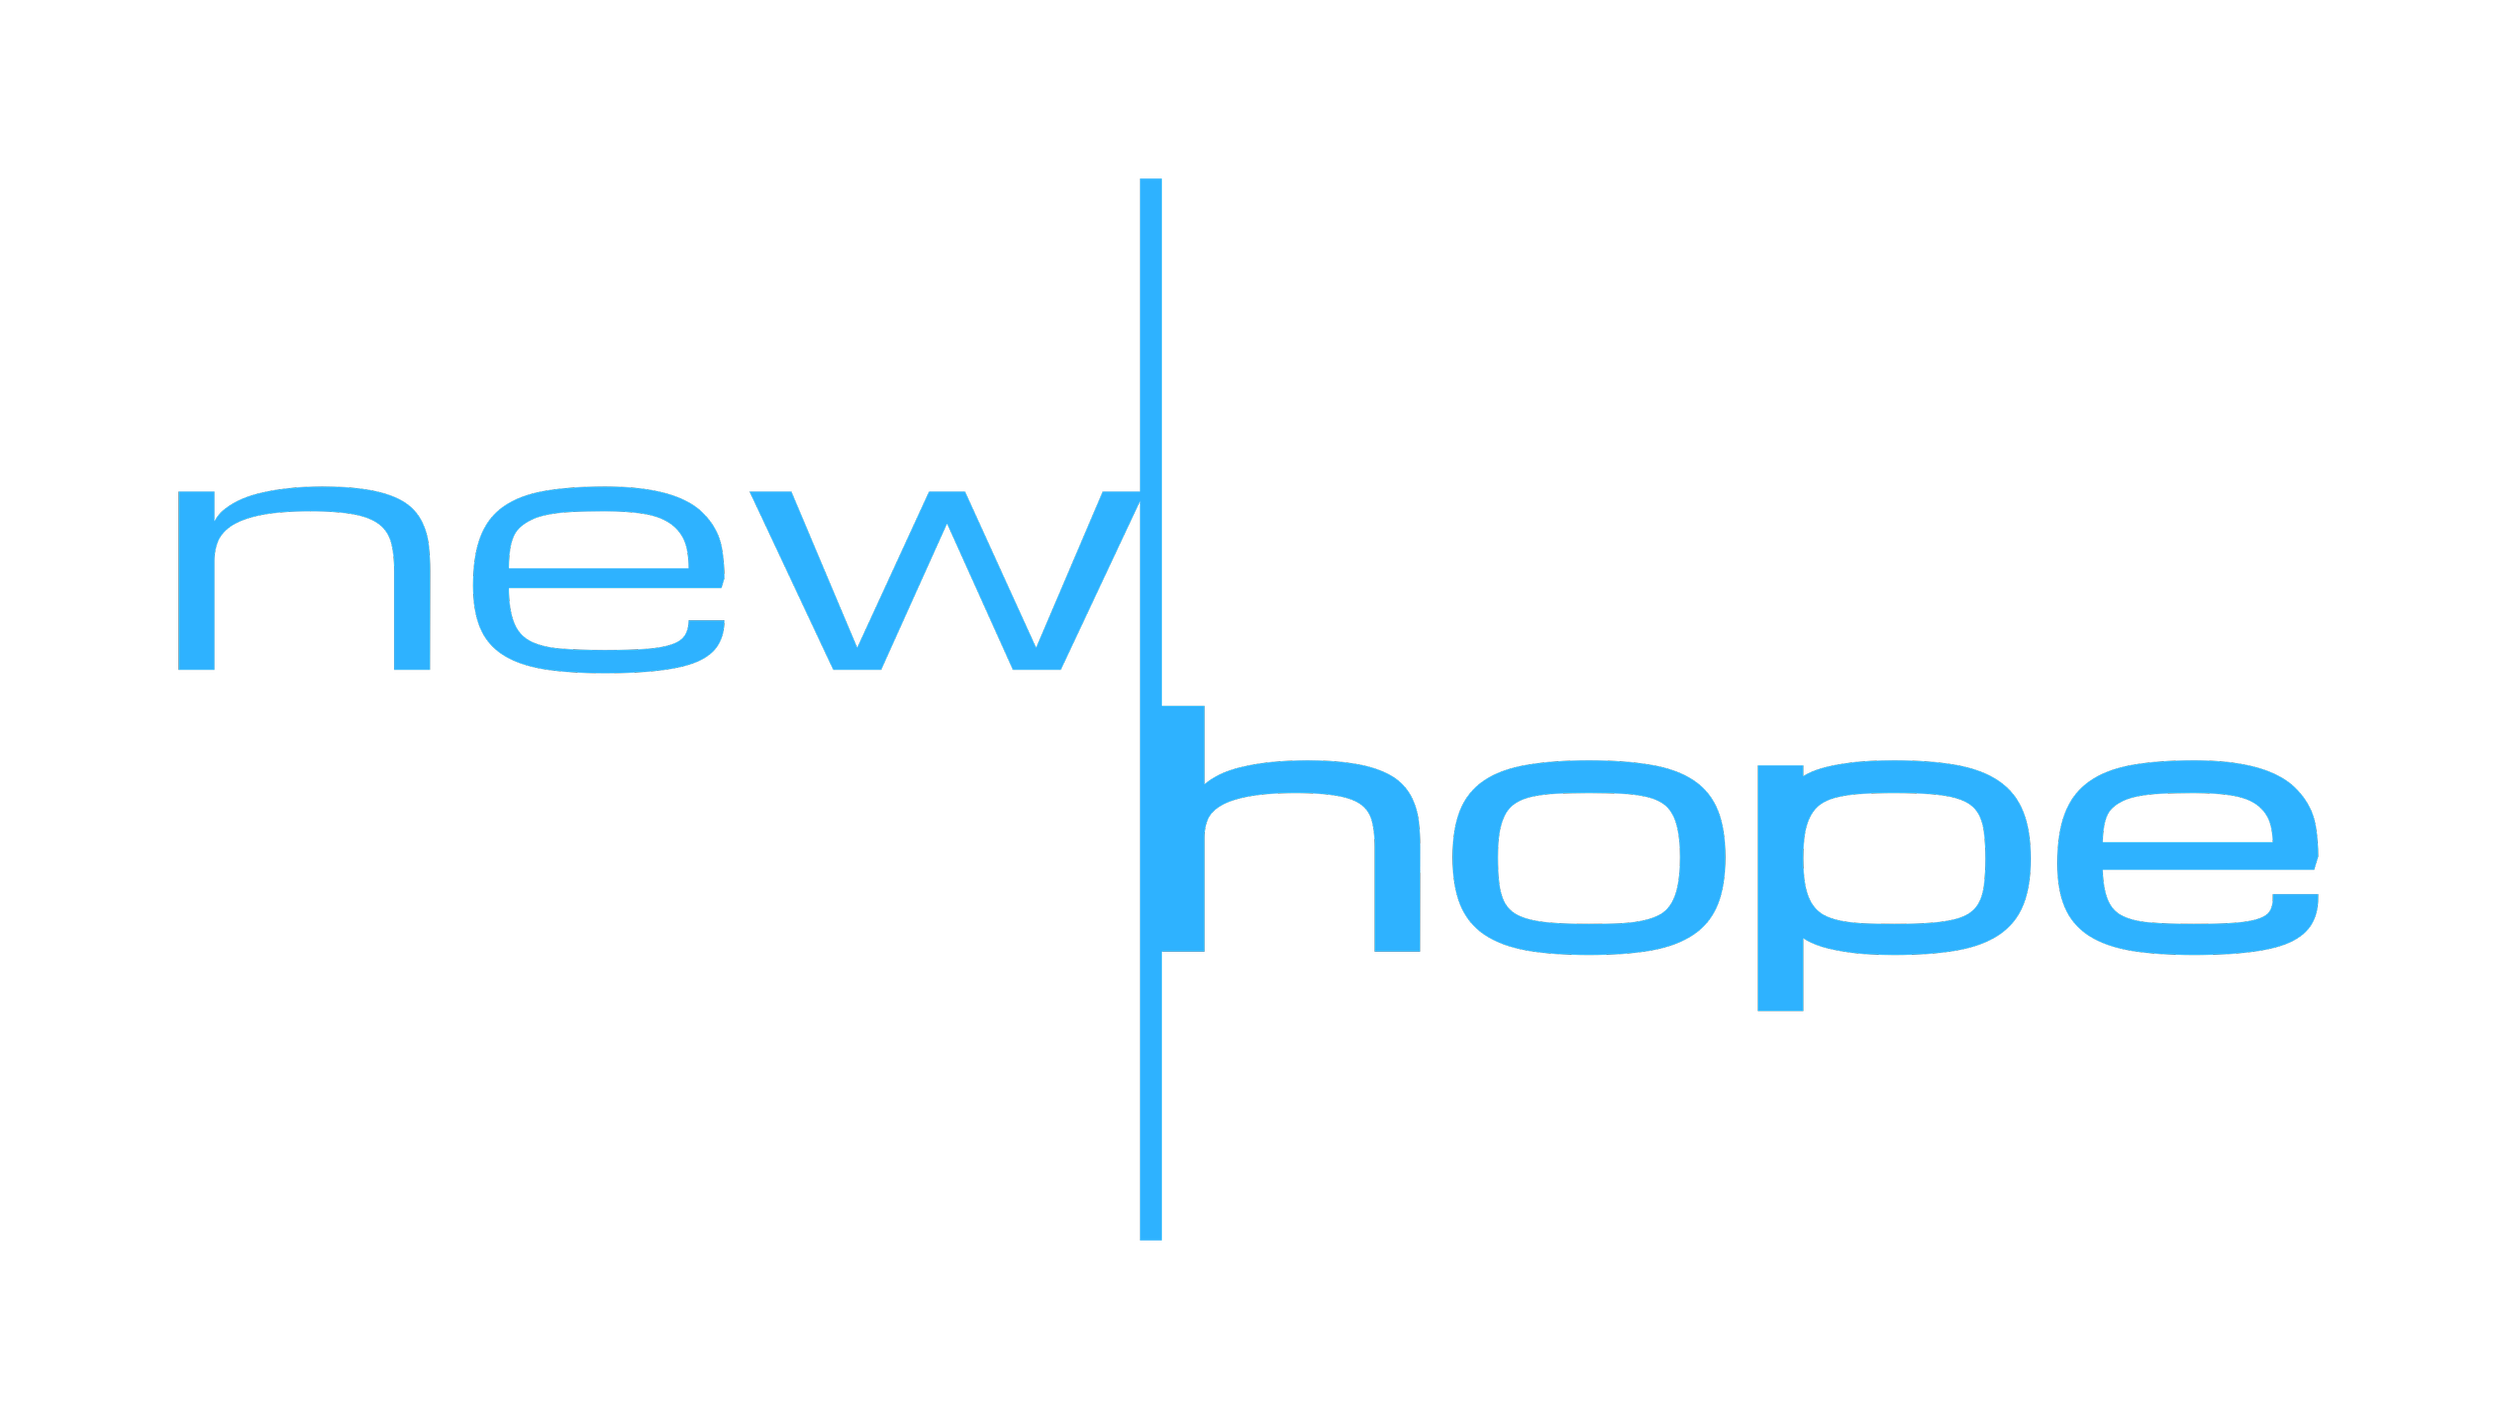 New Hope Free Methodist Church